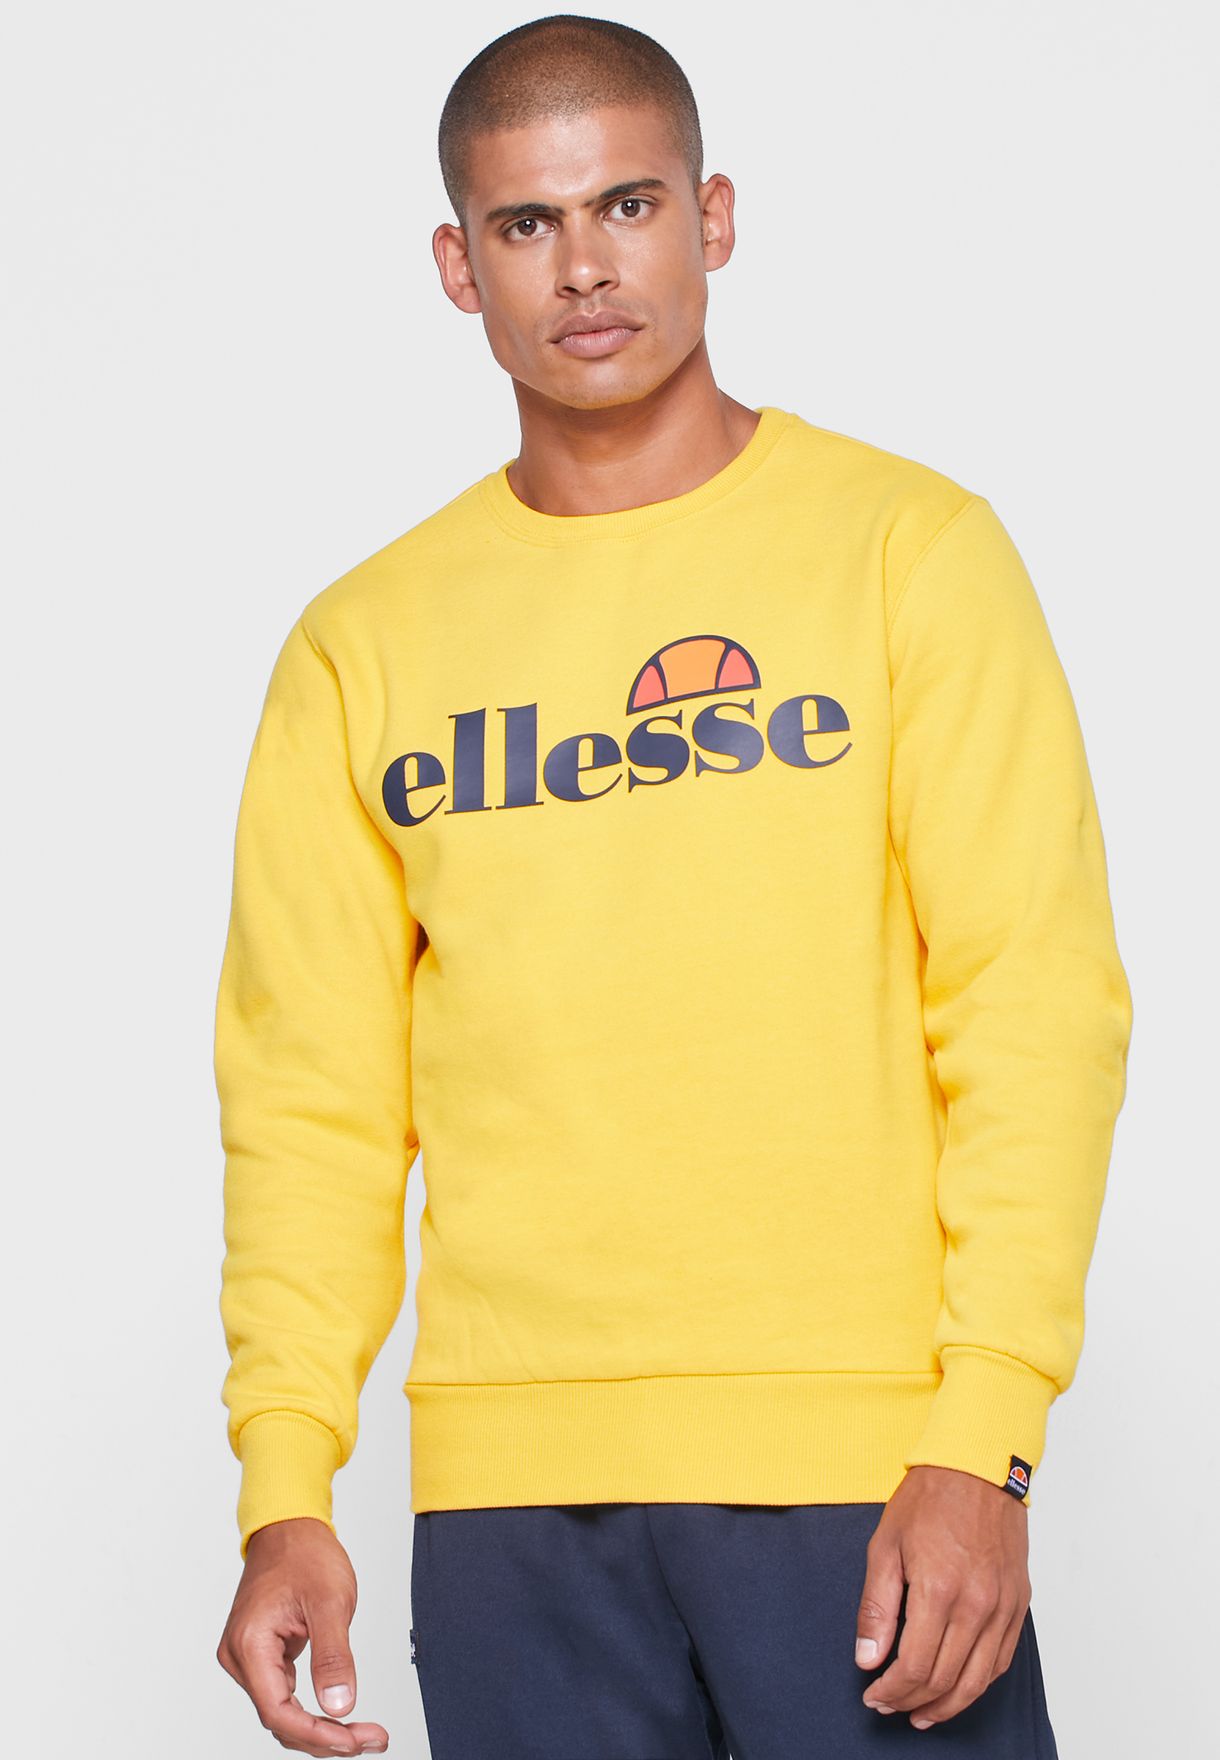 ellesse yellow sweatshirt